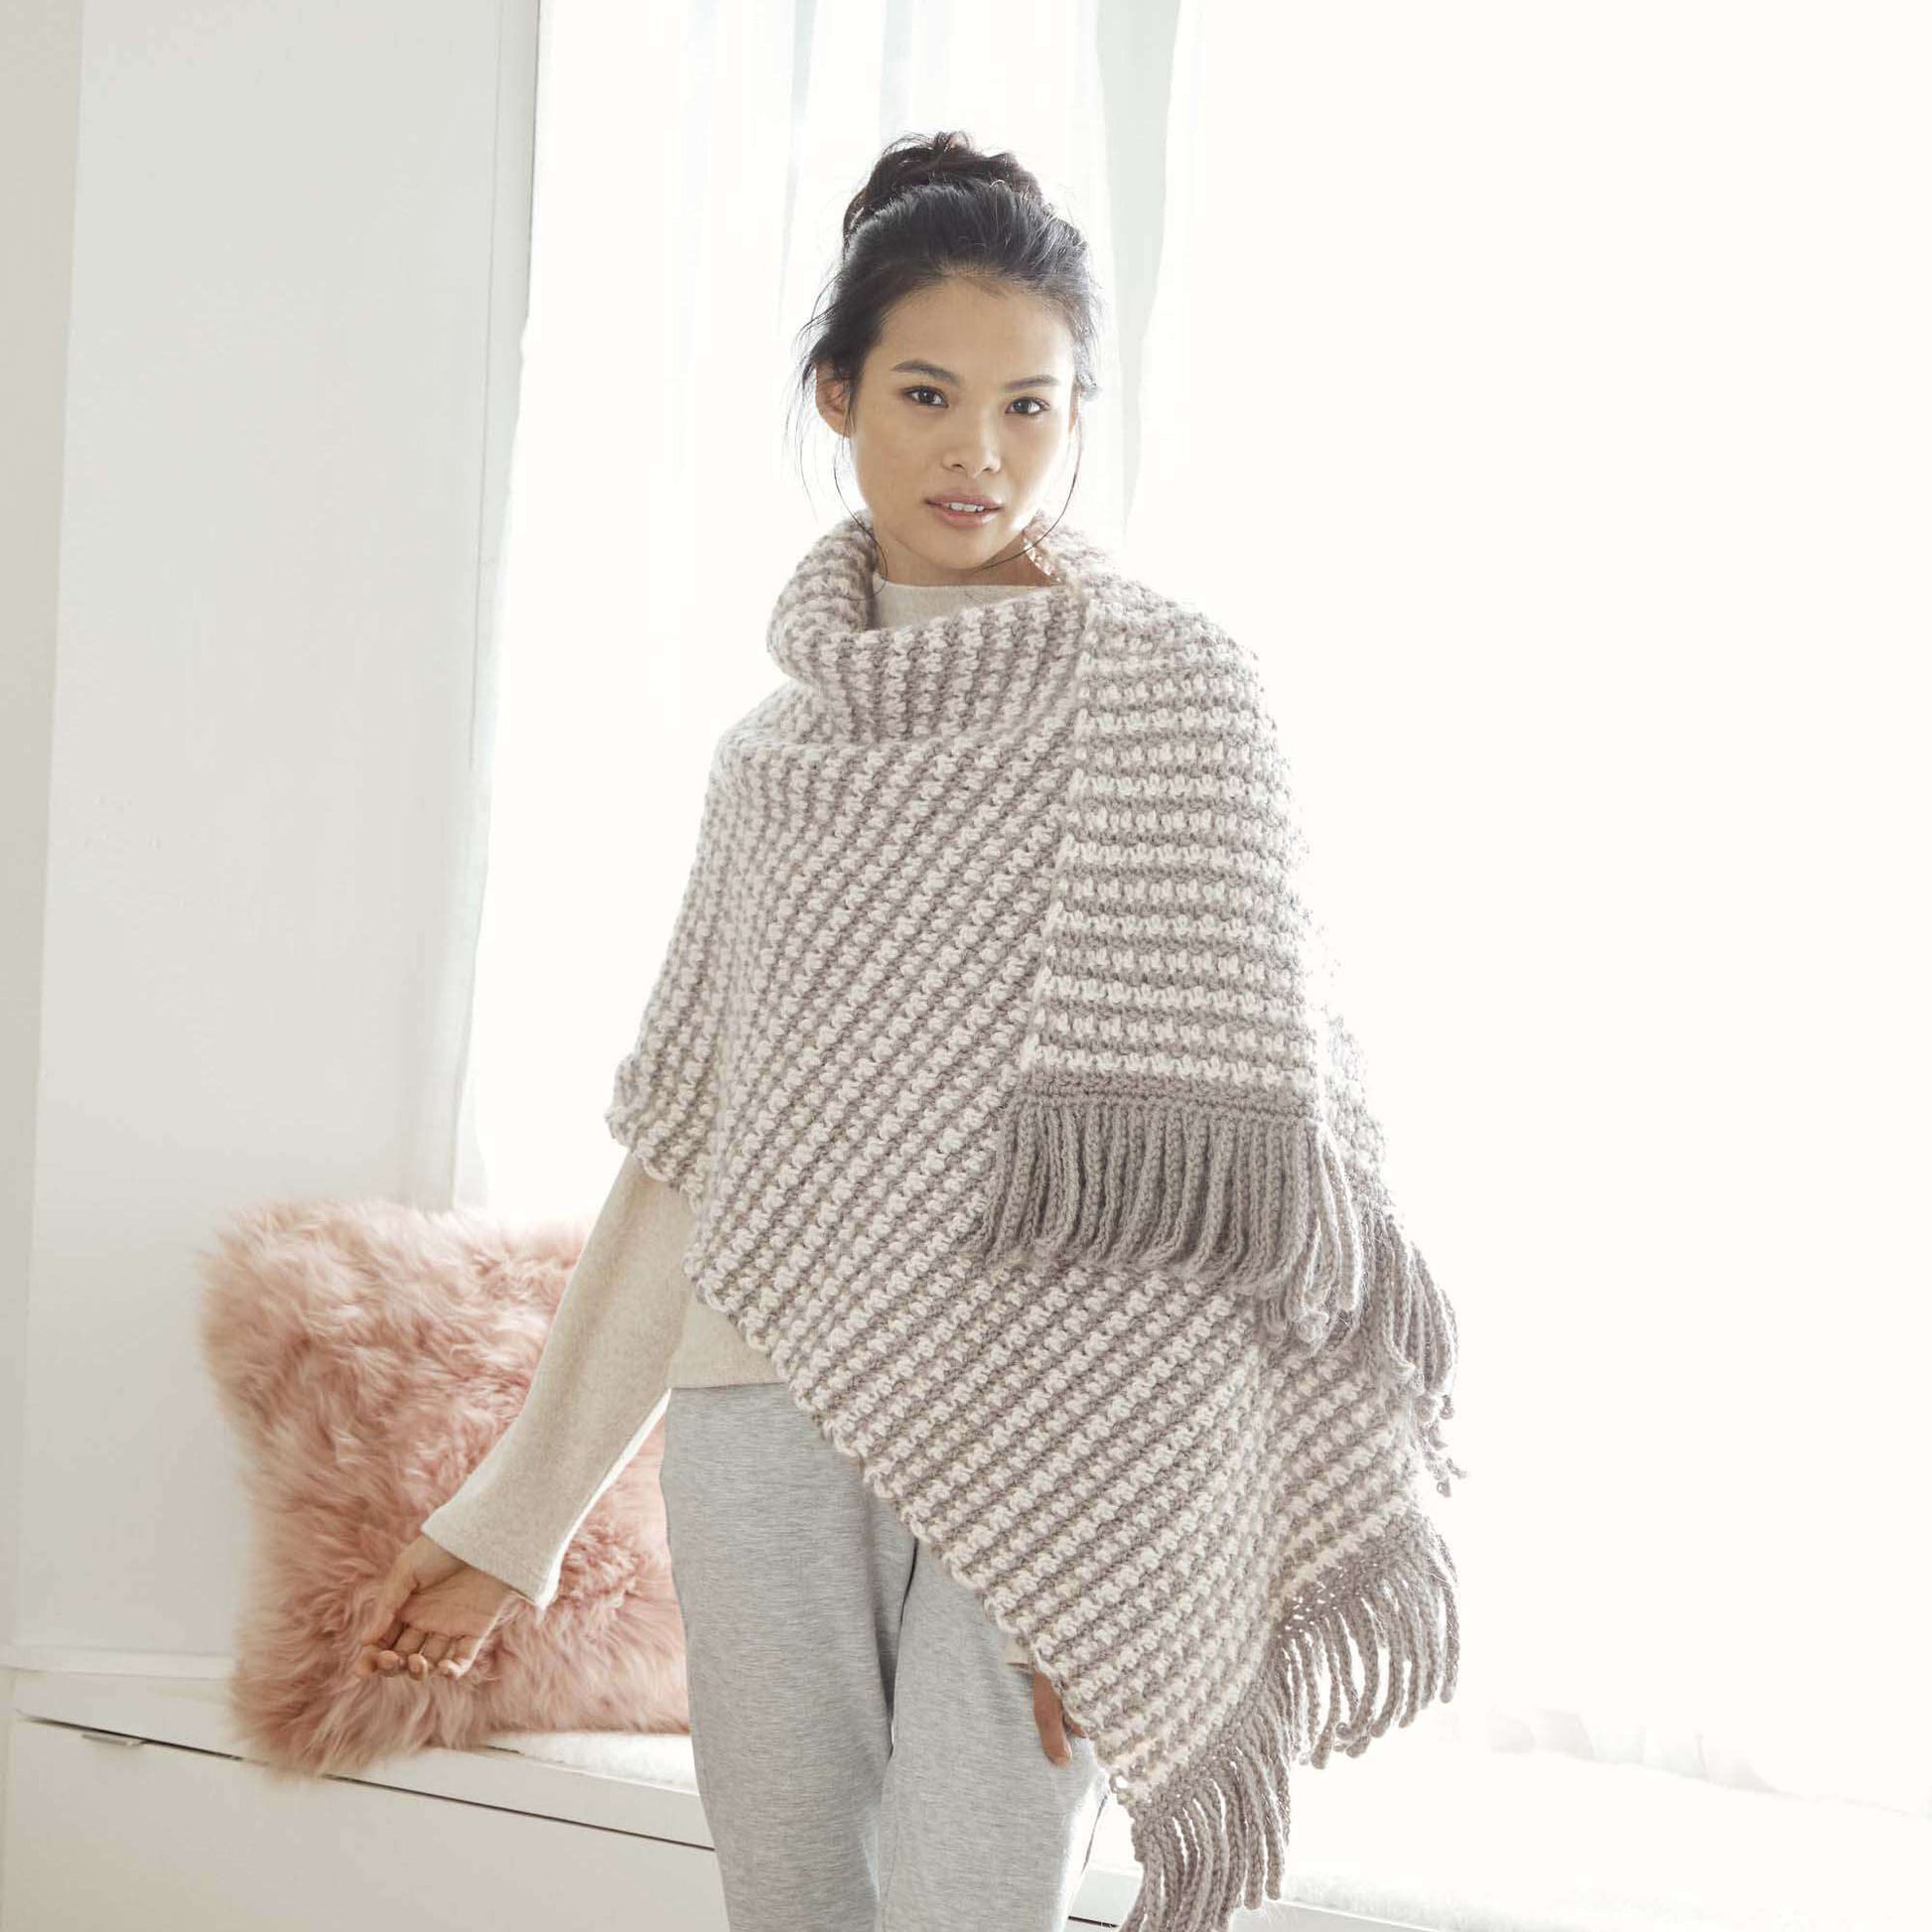 Patons Tweed Crochet Shawl Single Size